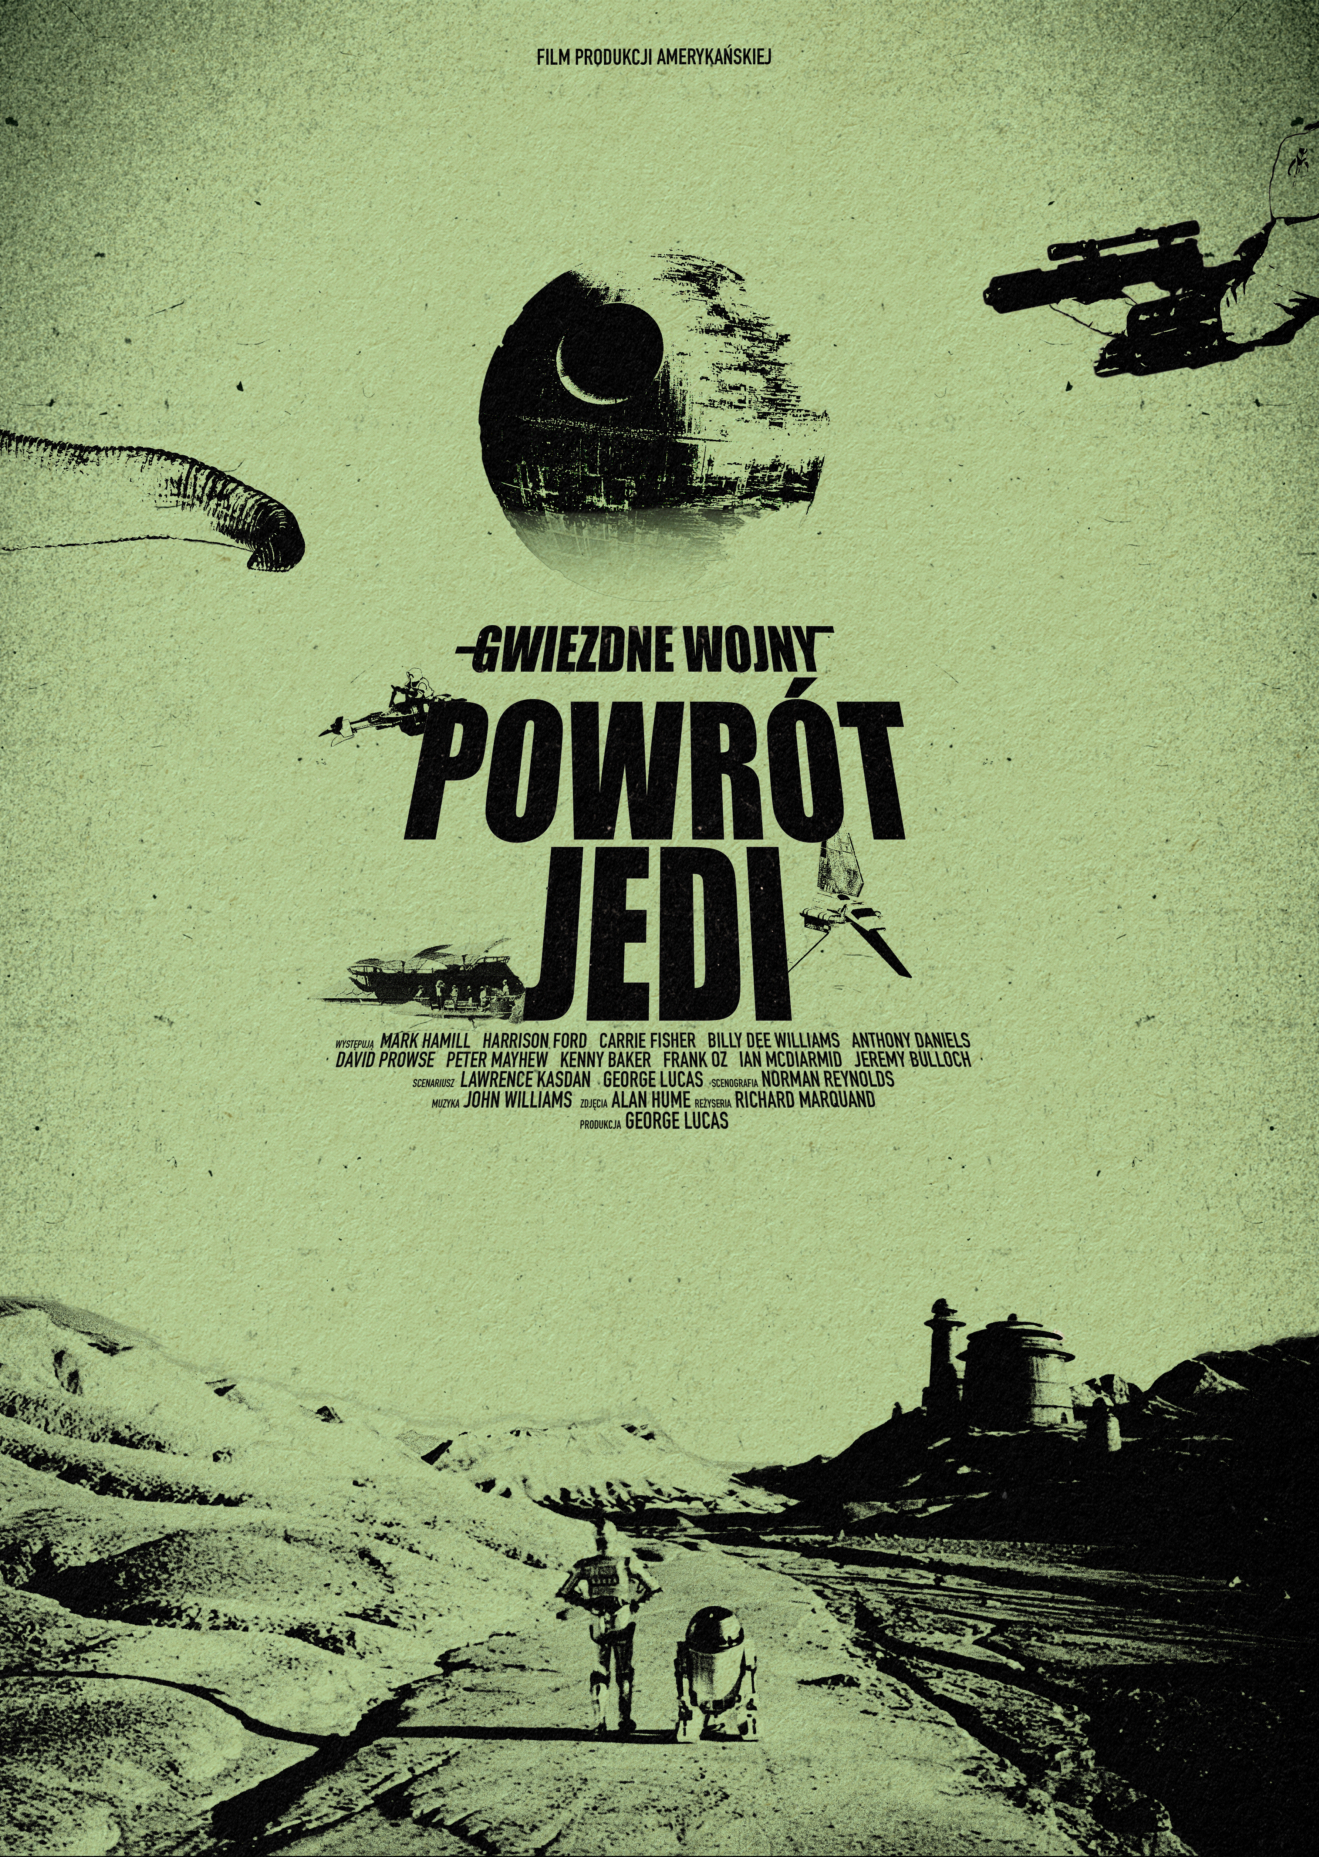 Star Wars: Return of The Jedi (Polish poster)